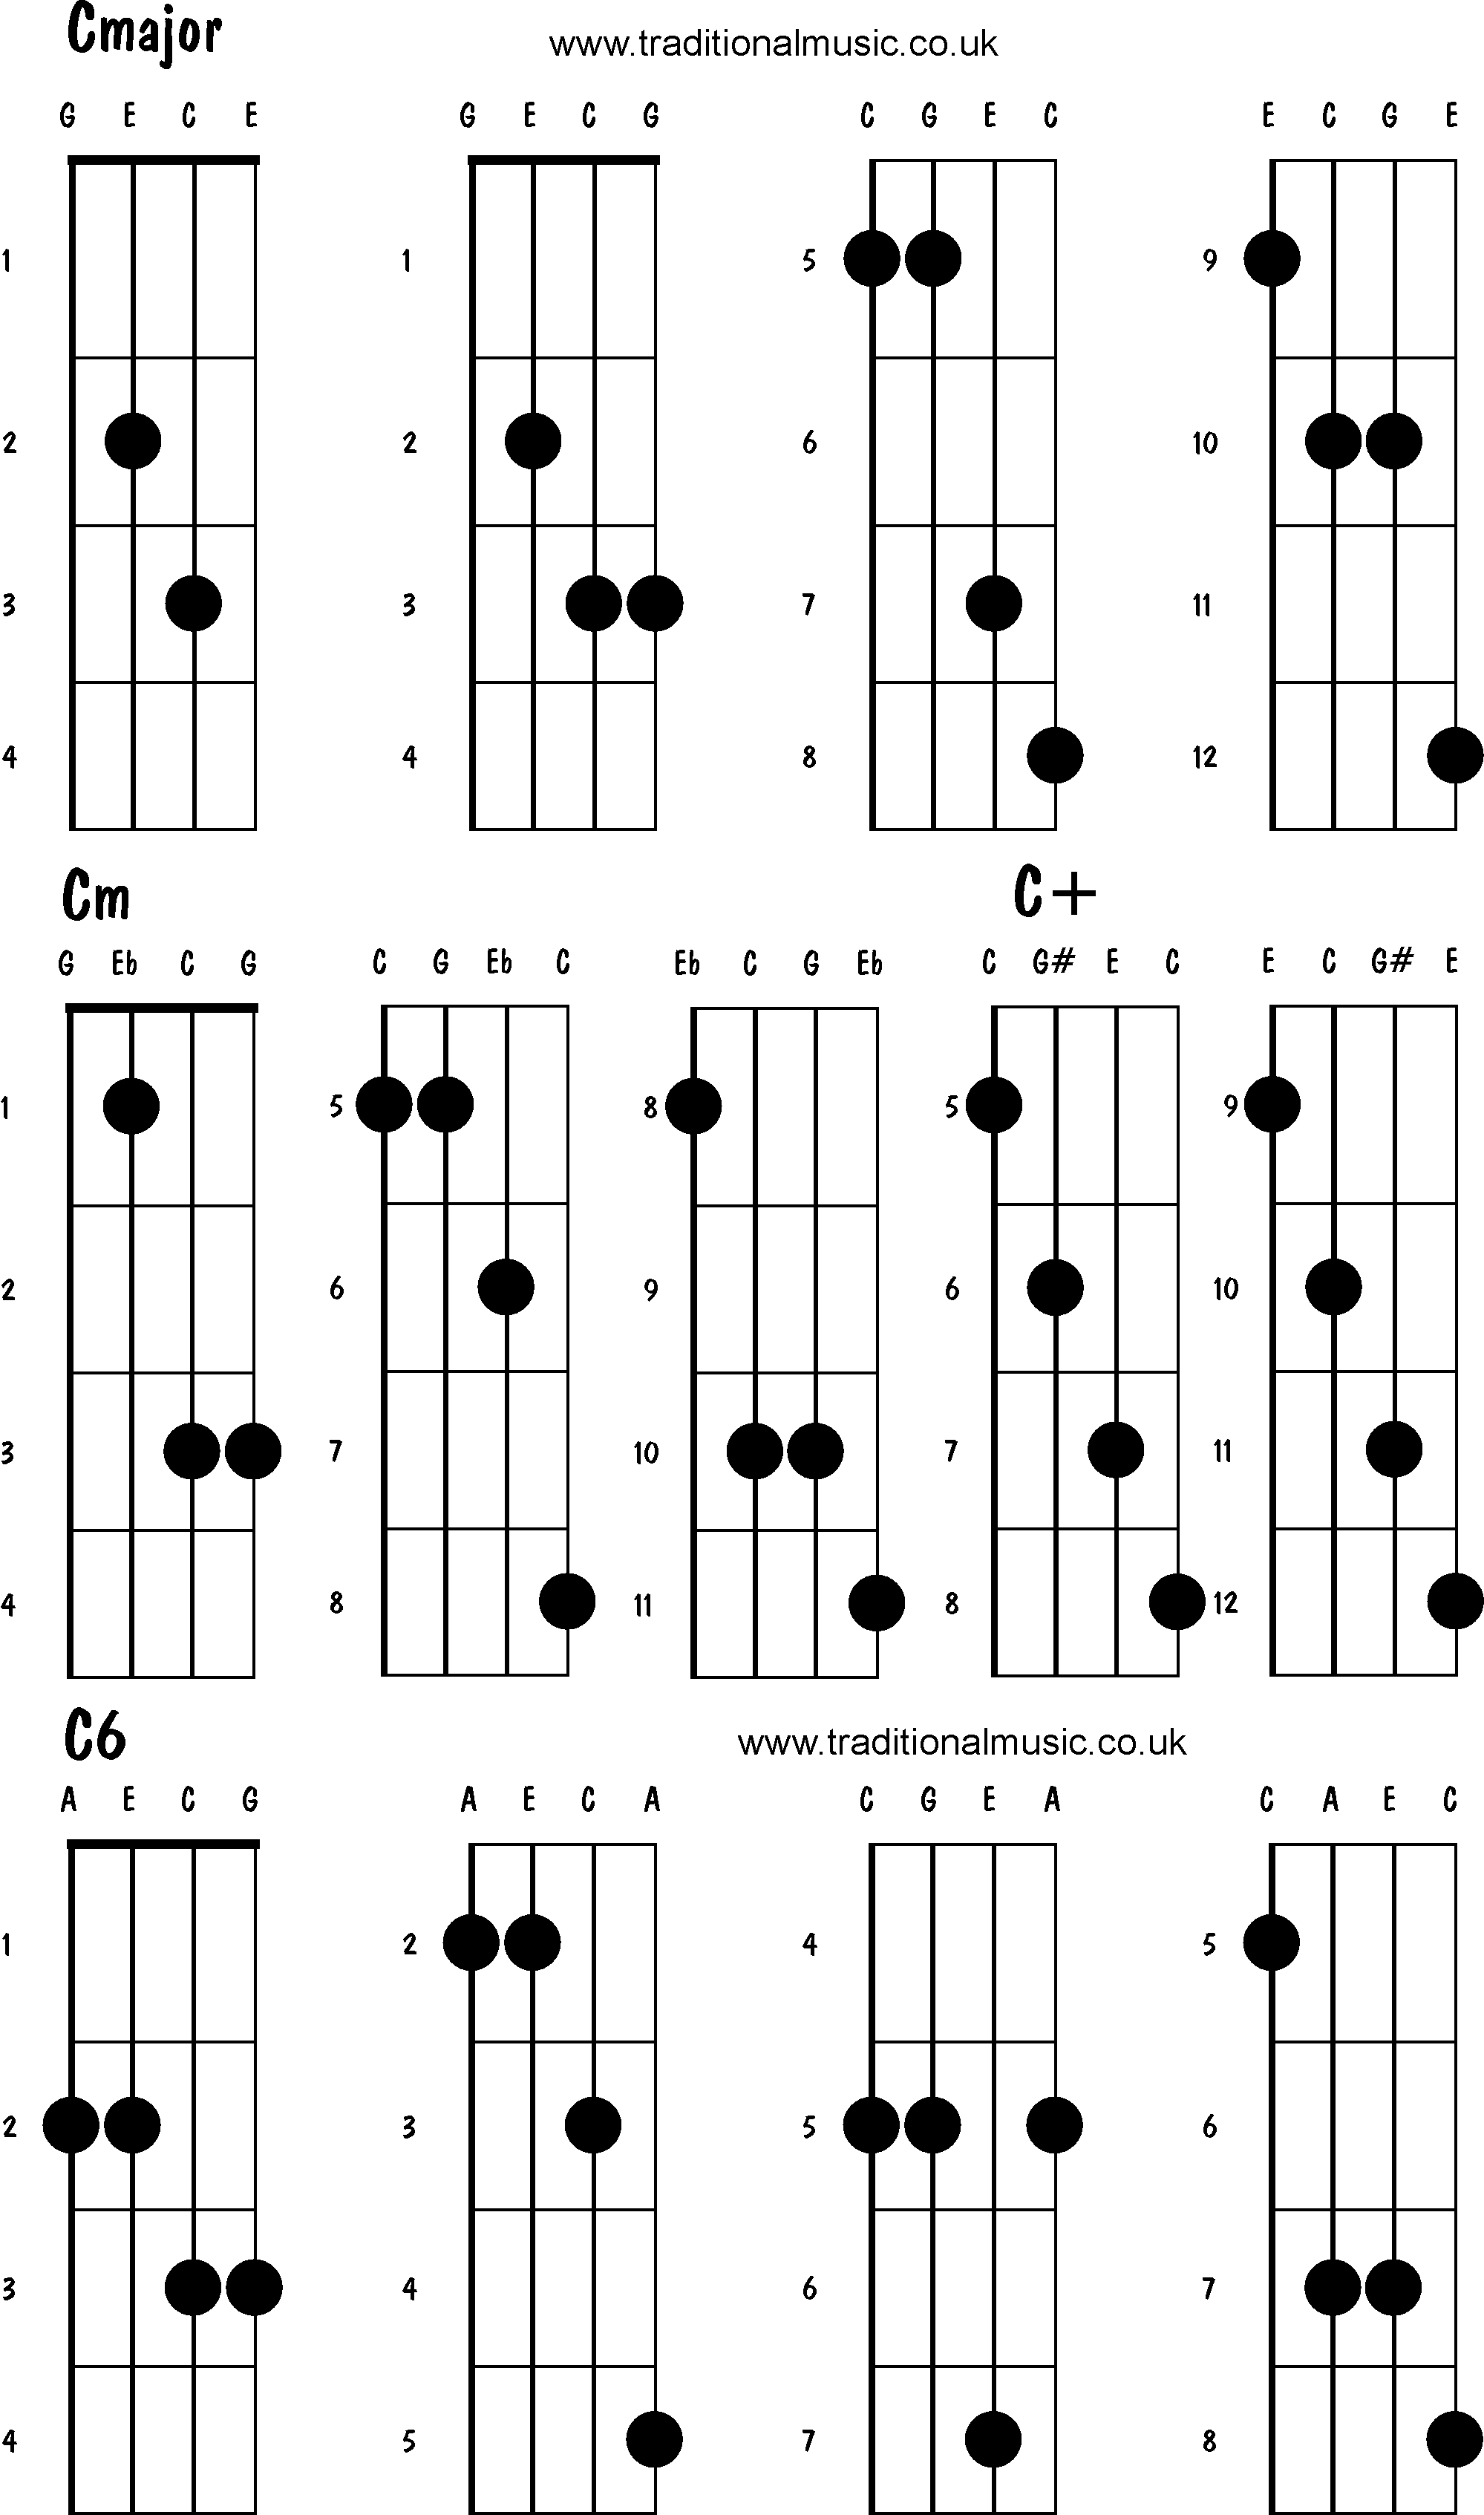 Advanced mandolin chords:Cmajor, Cm, C+, C6